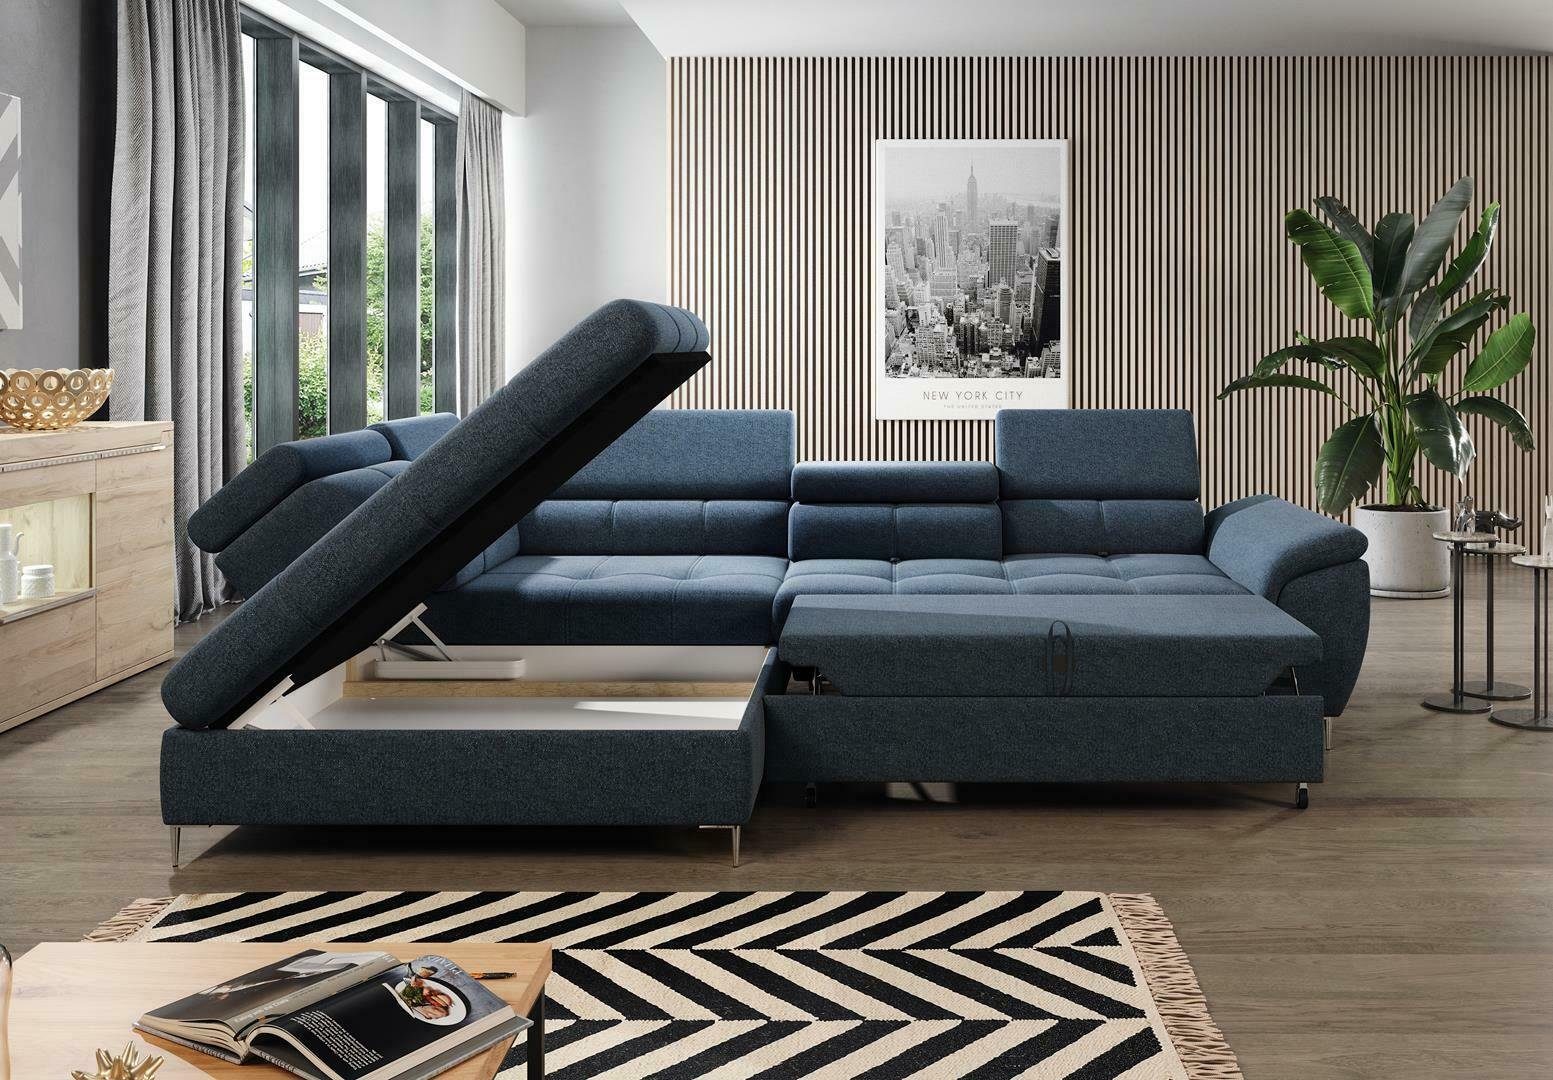 Ecksofa JVmoebel Sofa, Schlafsofa Design Ecksofa Couch Textil Bettfunktion Mit L-form Bettfunktion